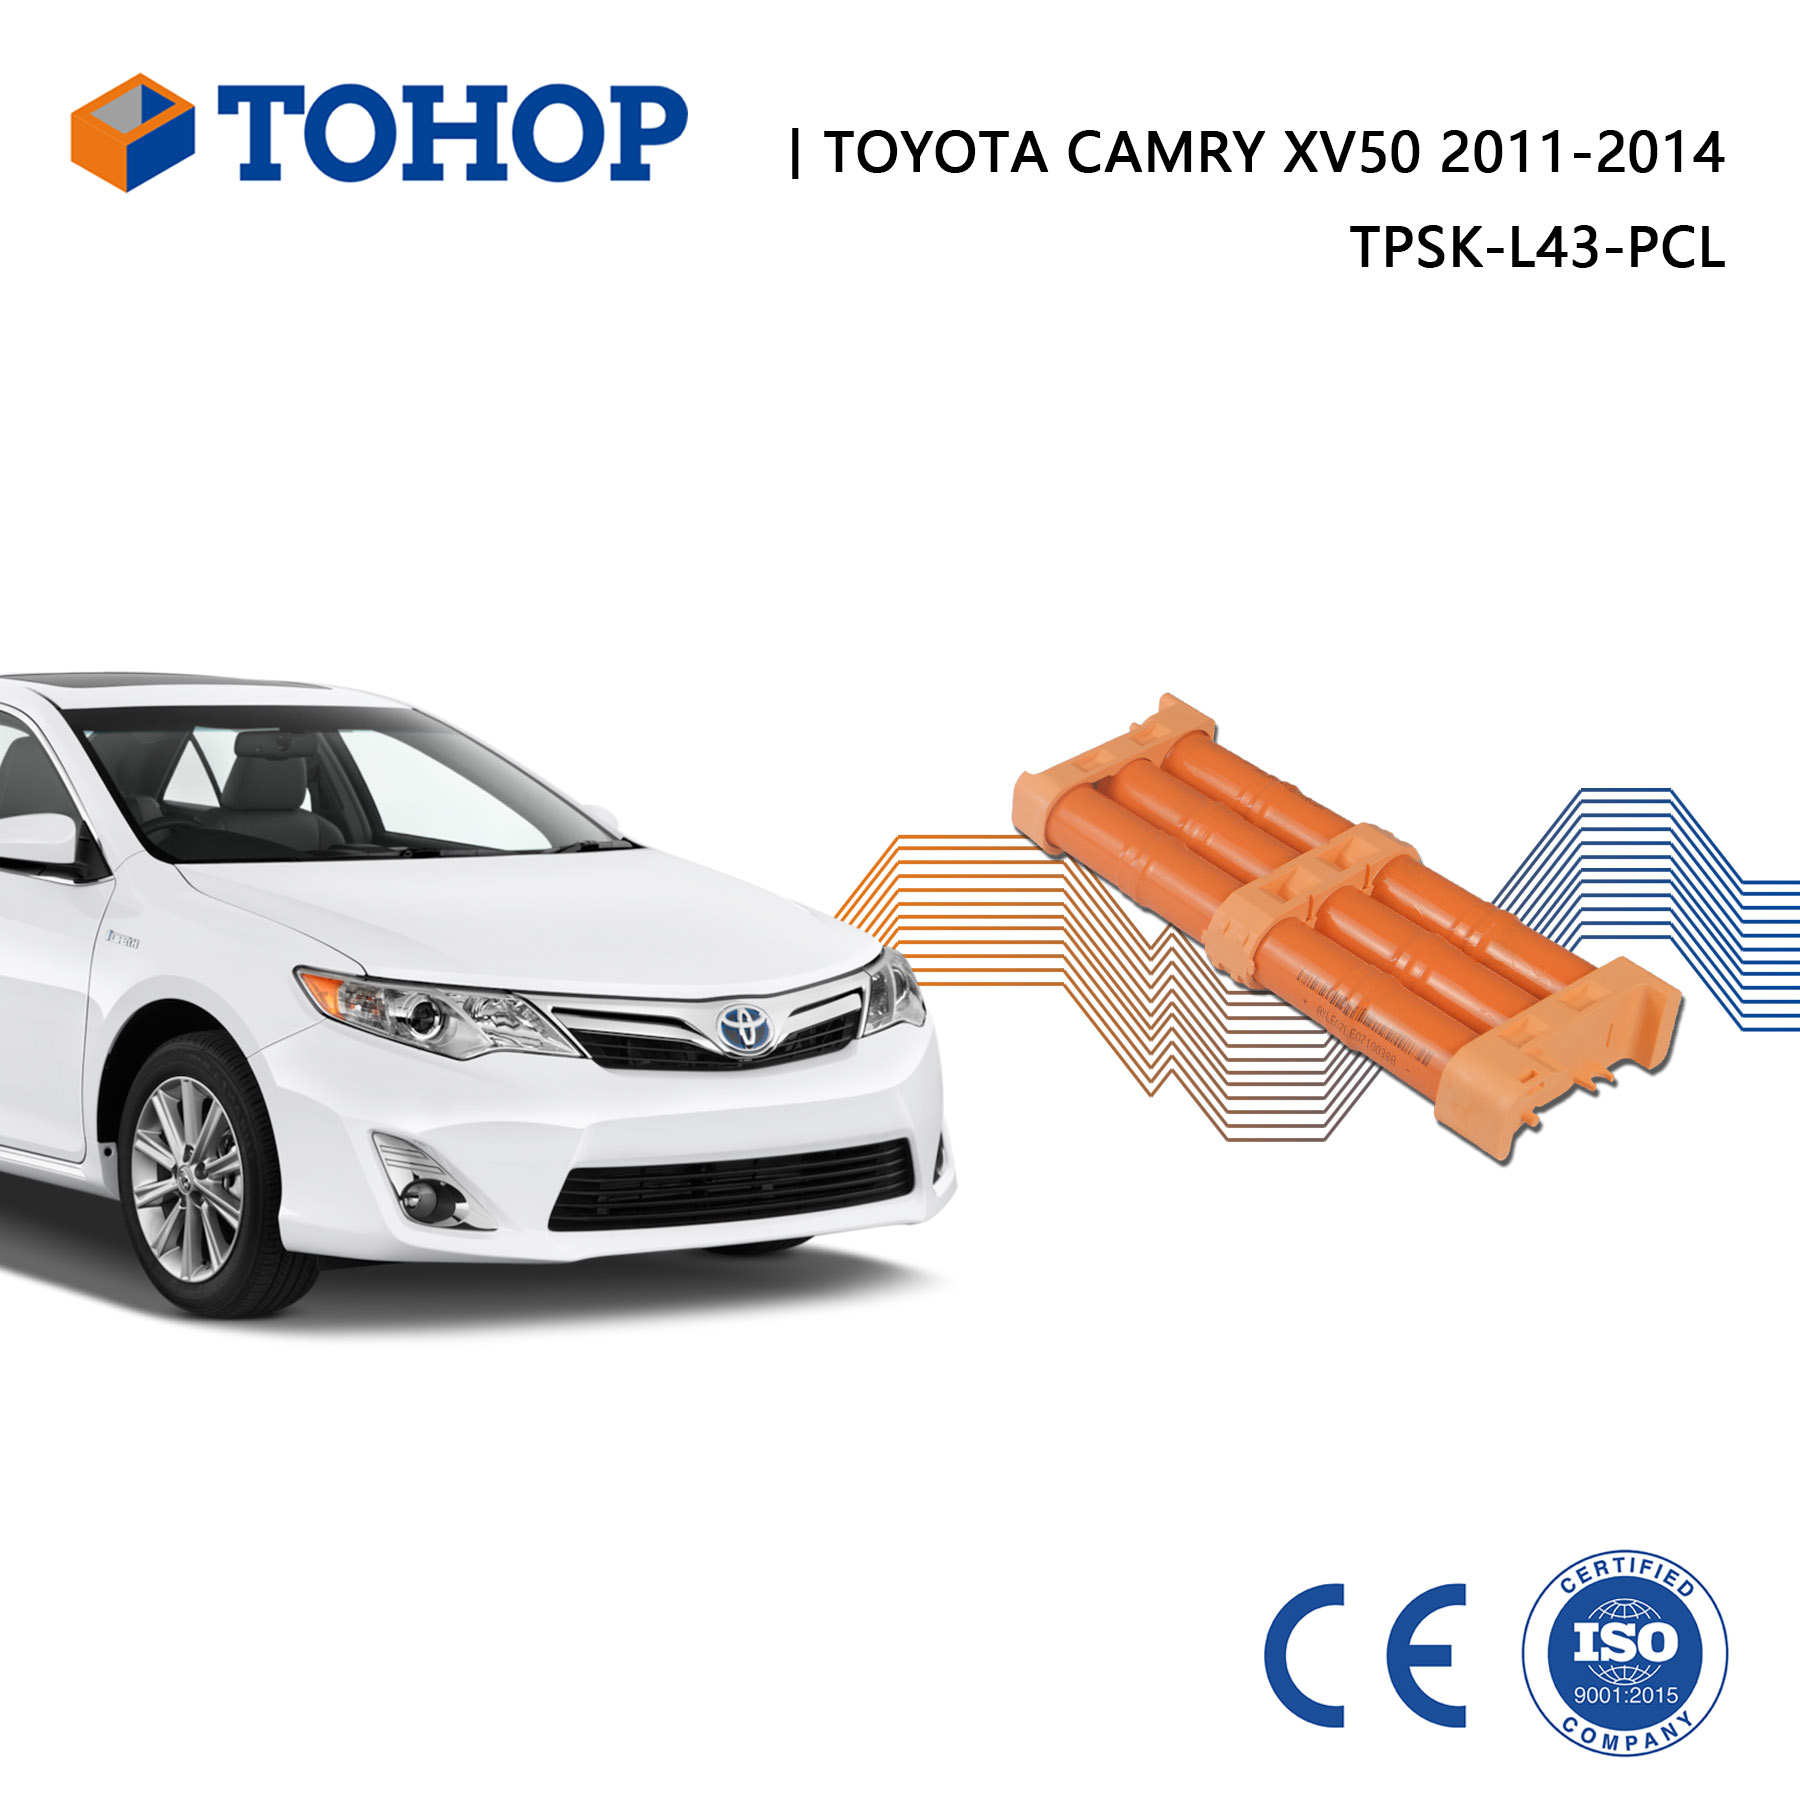 Nouvelle batterie hybride Camry XV50 2014 14.4V pour Toyota